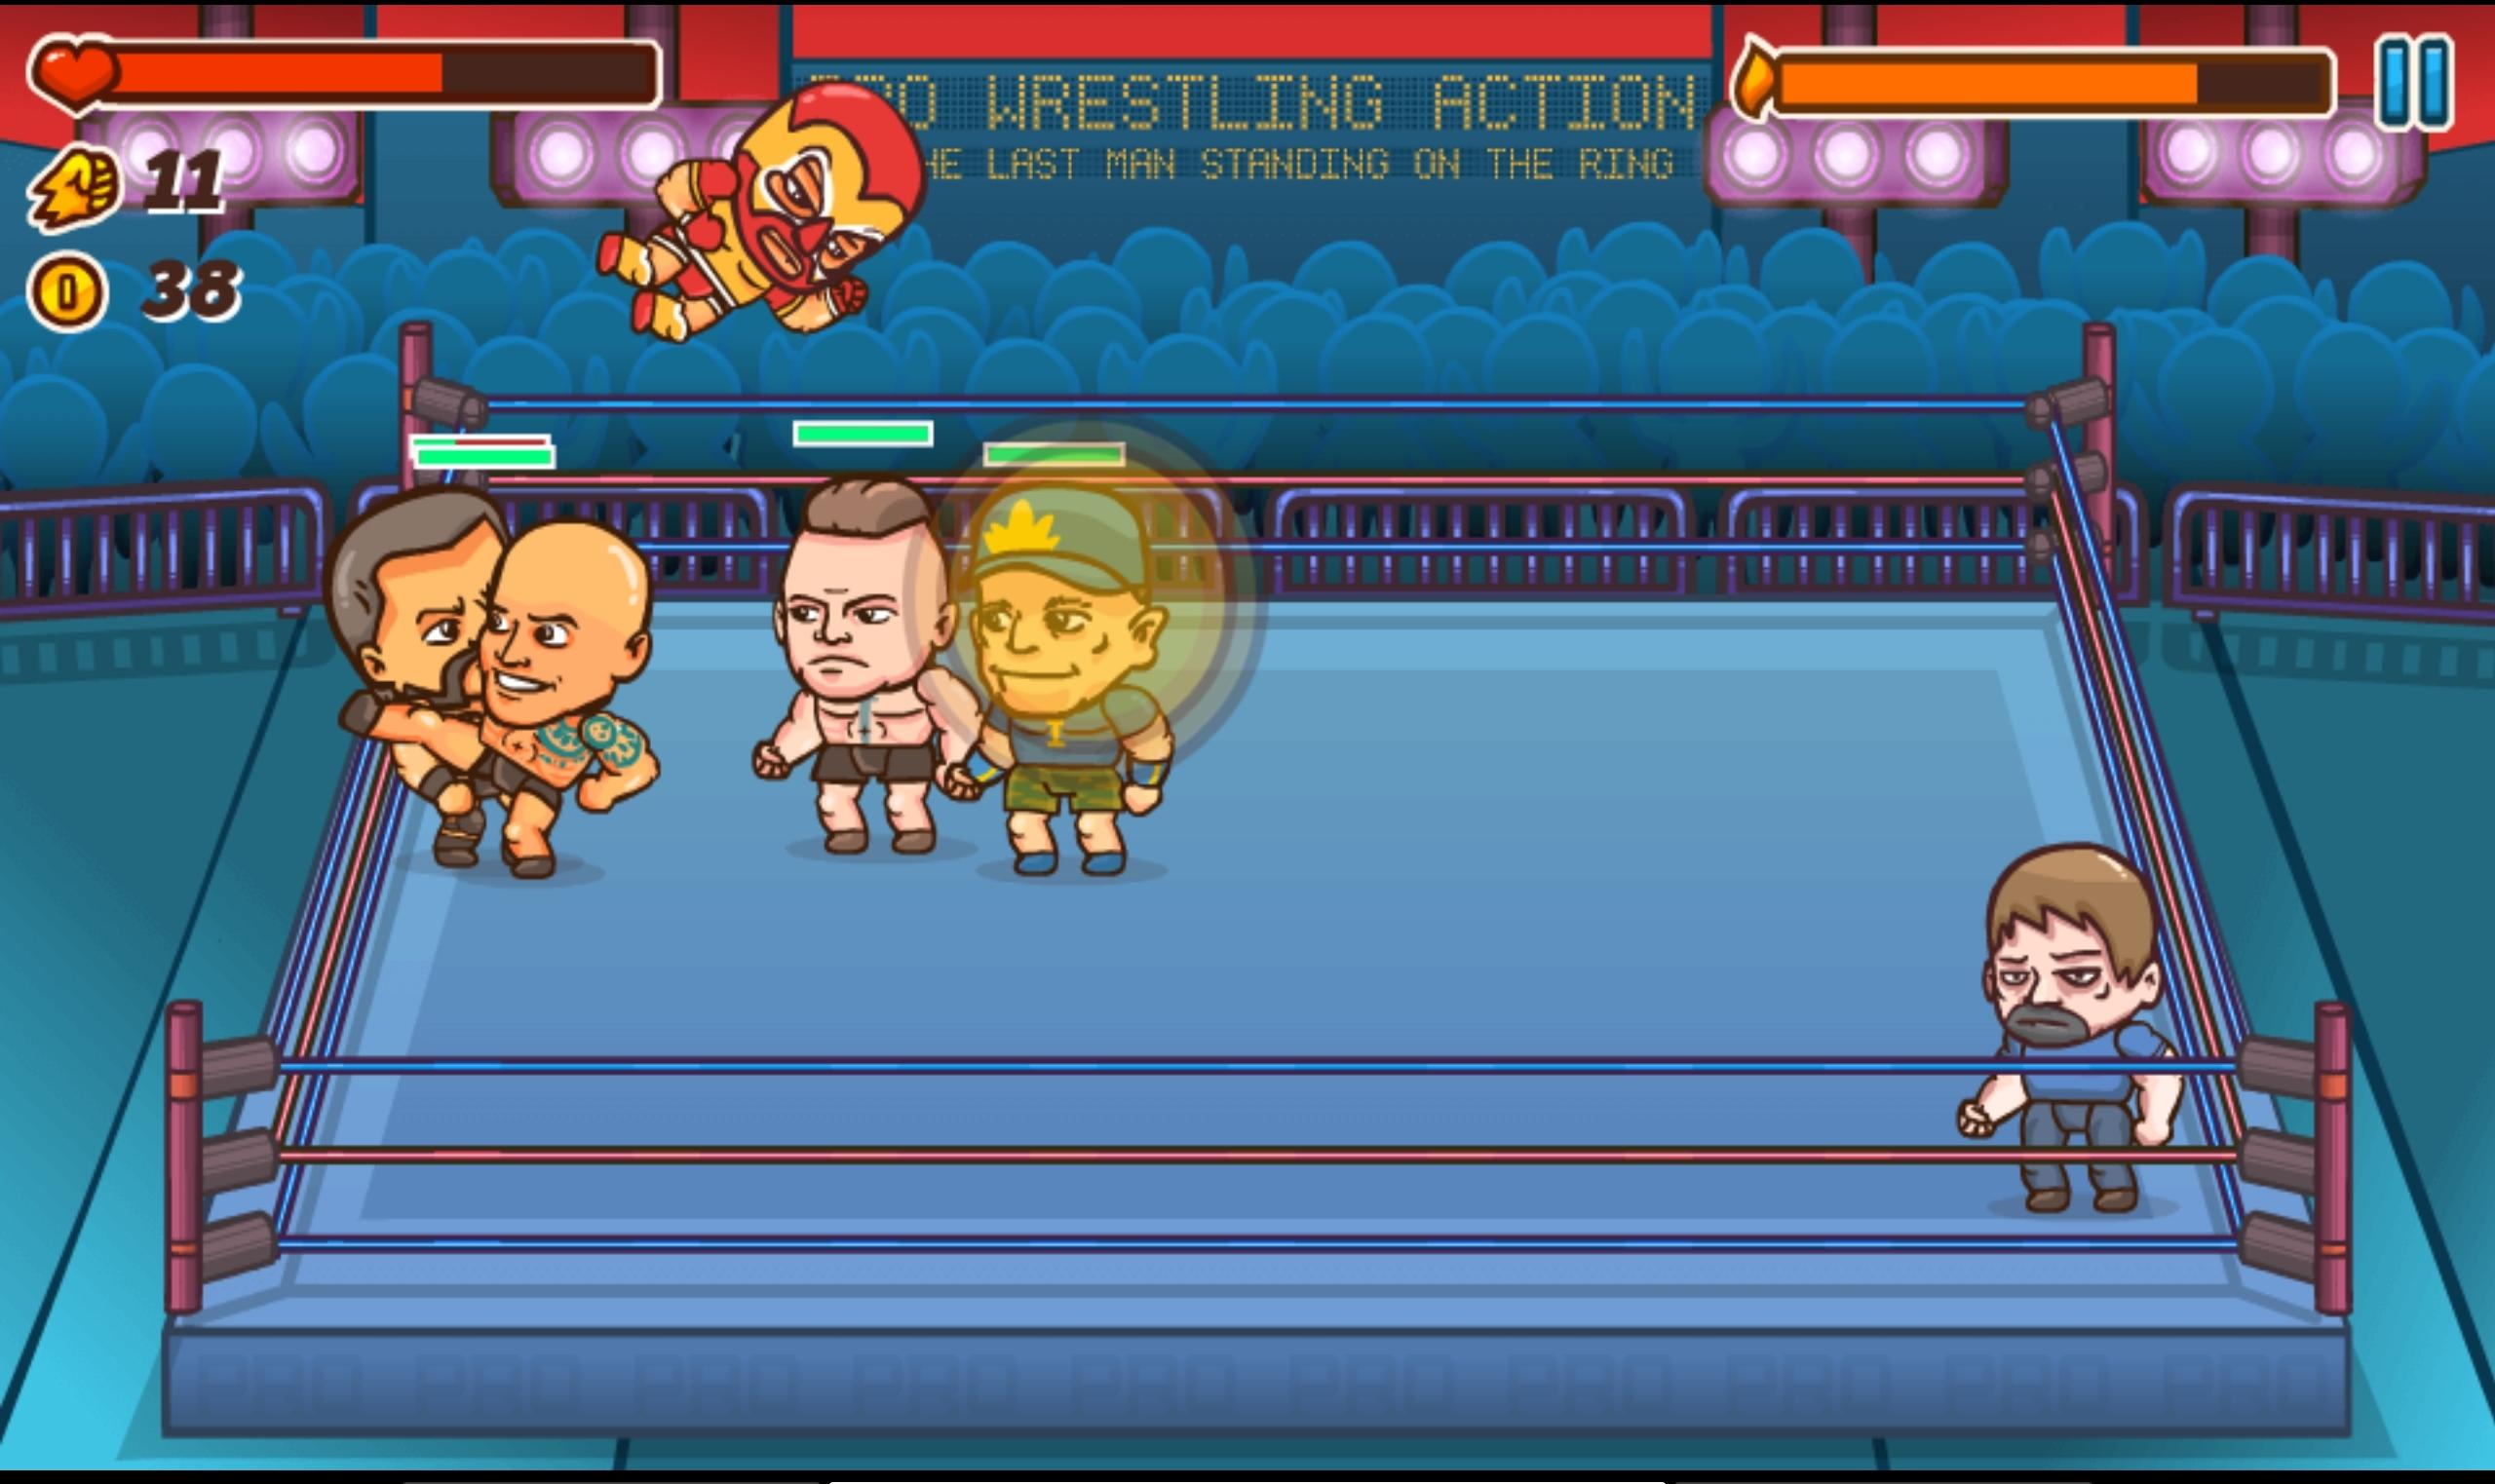 Screenshot 1 of Wrestling wwe Fight 9.8